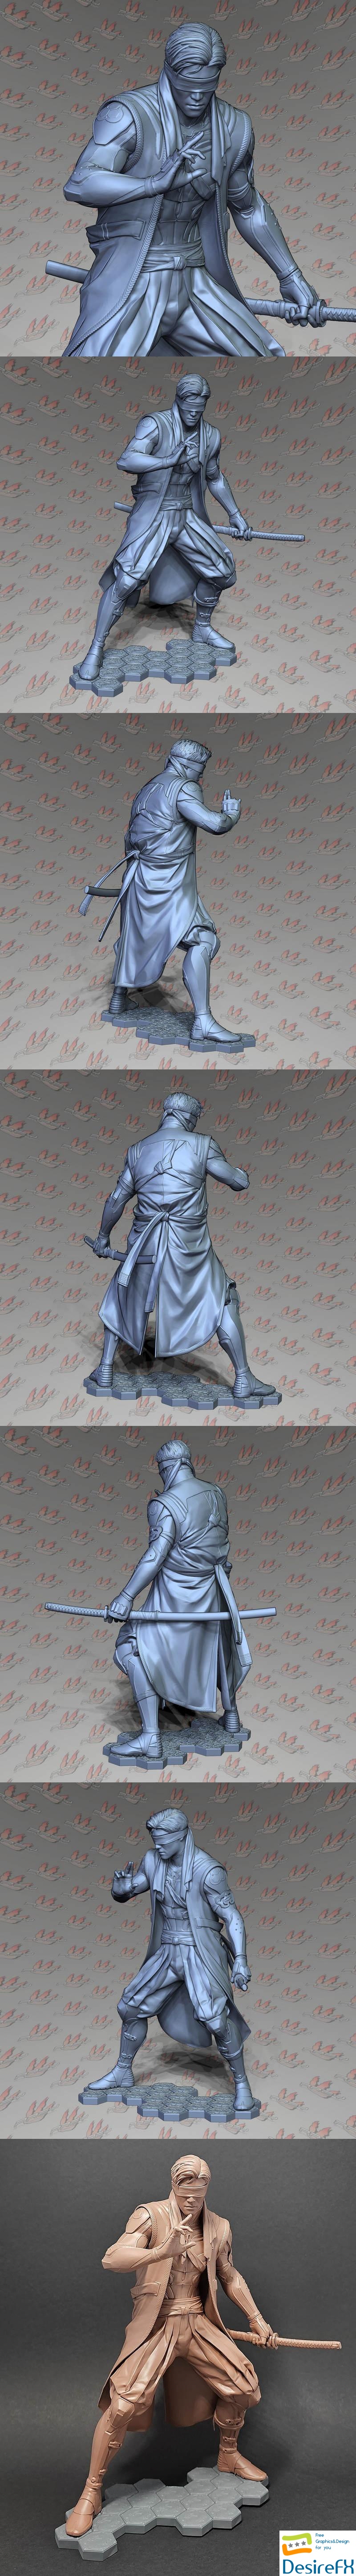 Kenshi from Mortal Kombat 12 - 3D Print